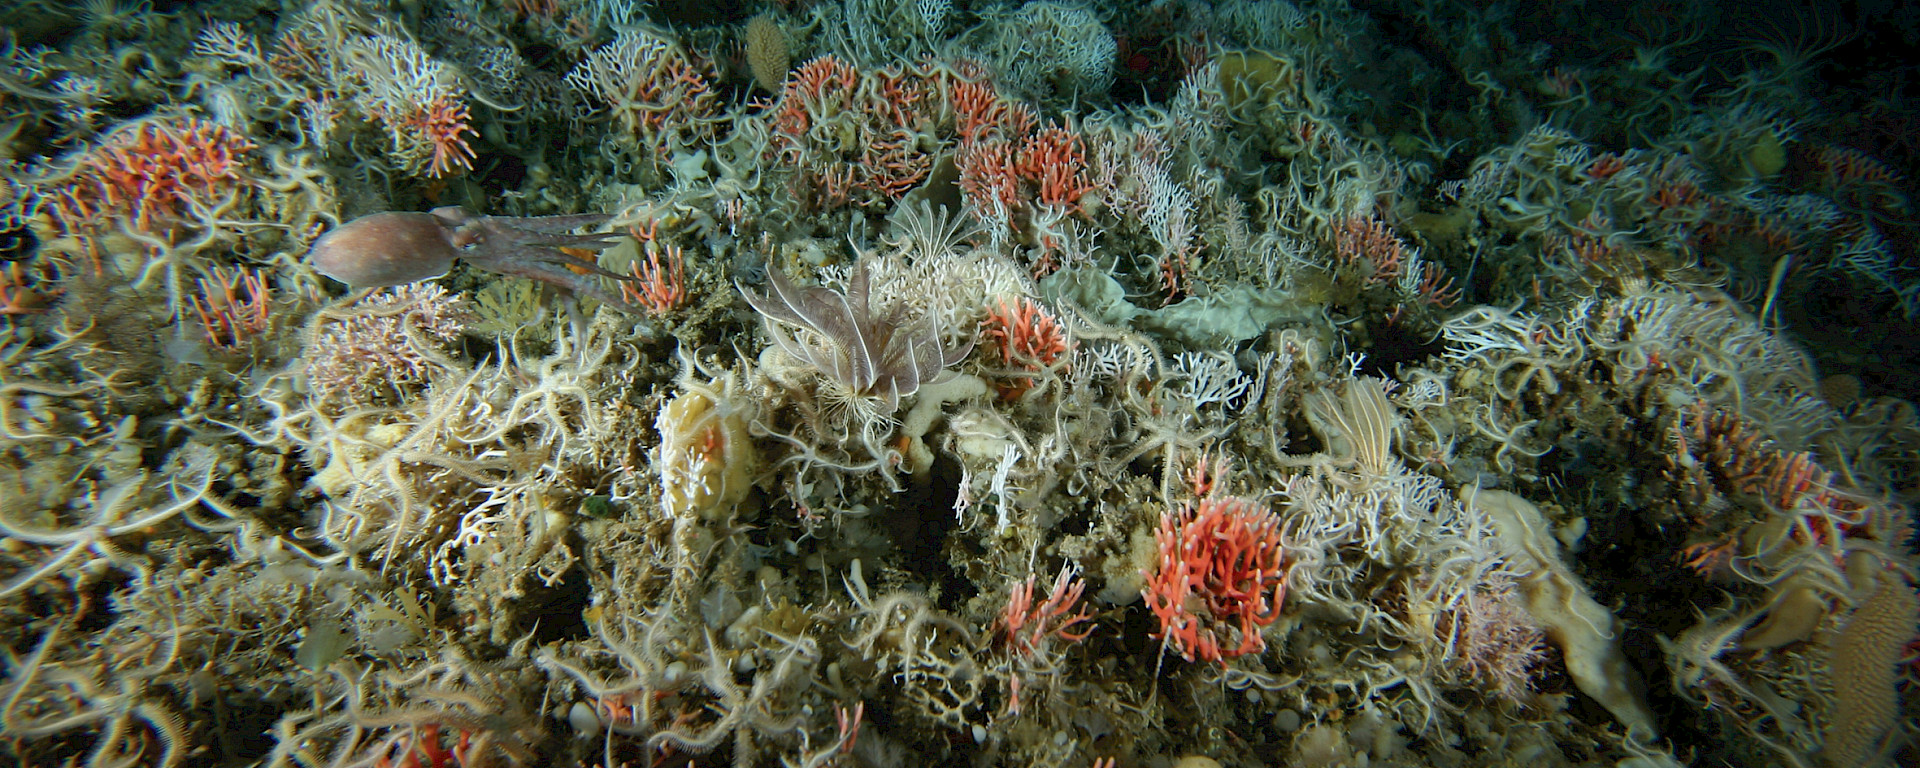 An octopus glides through an underwater garden of corals, sponges and starfish.